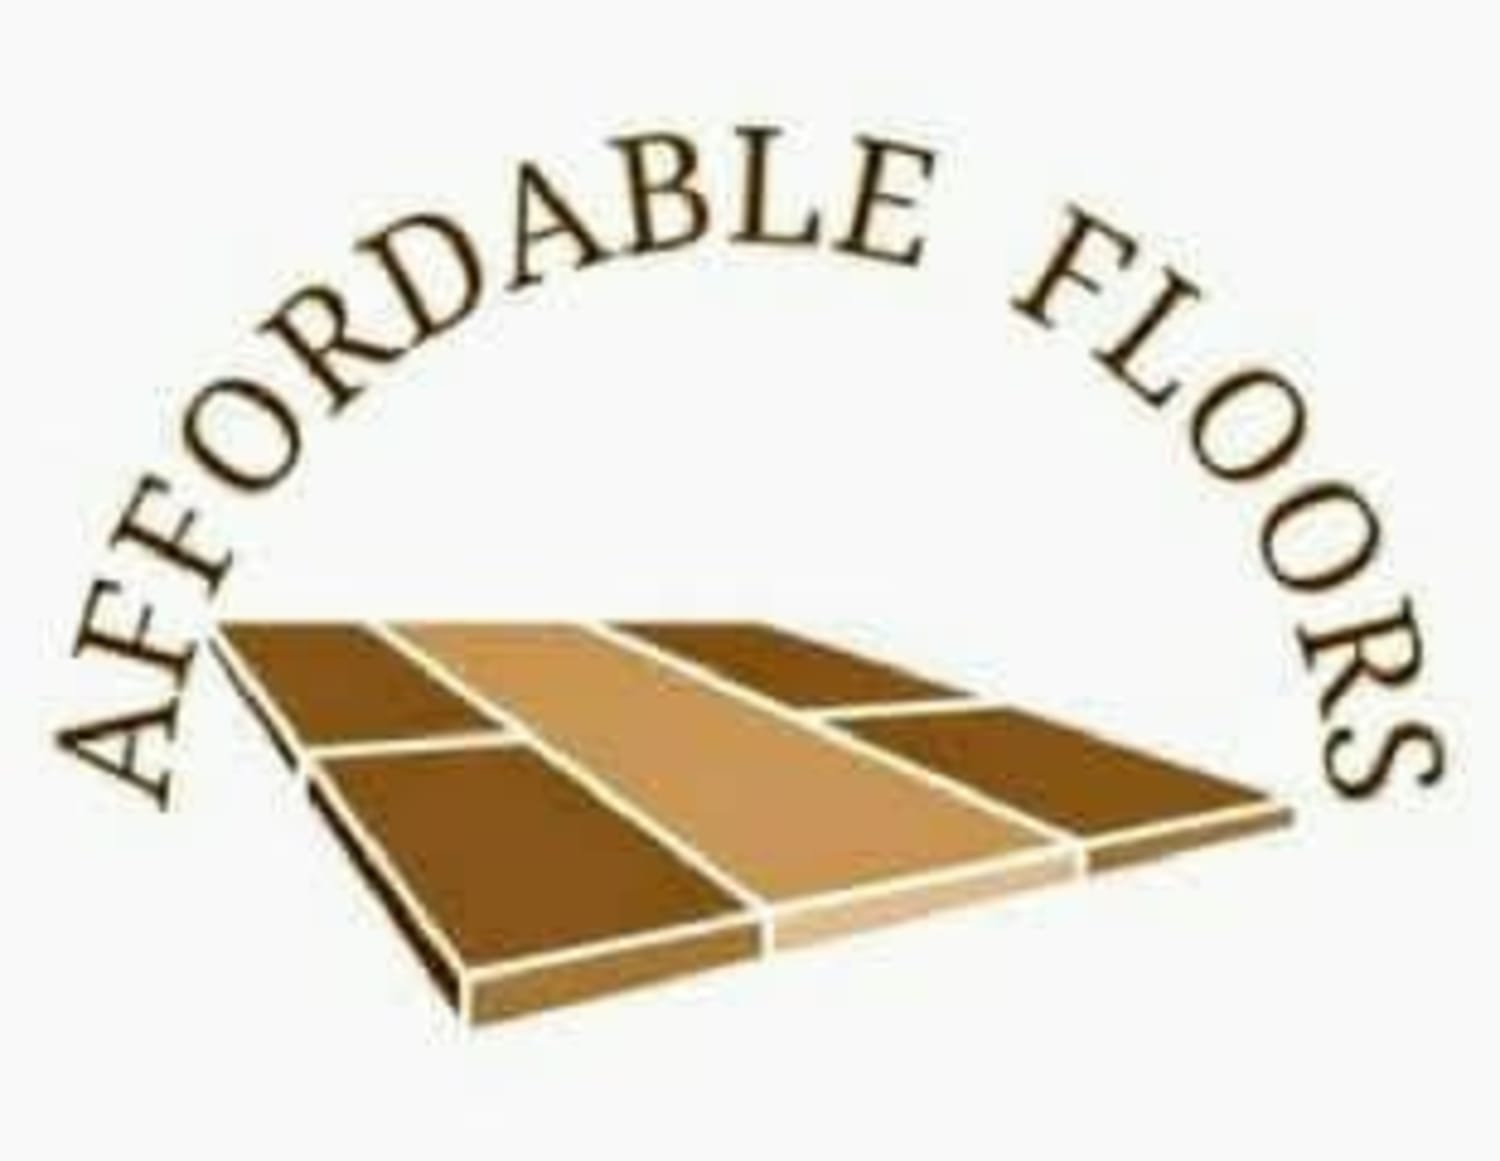 Affordable Floors